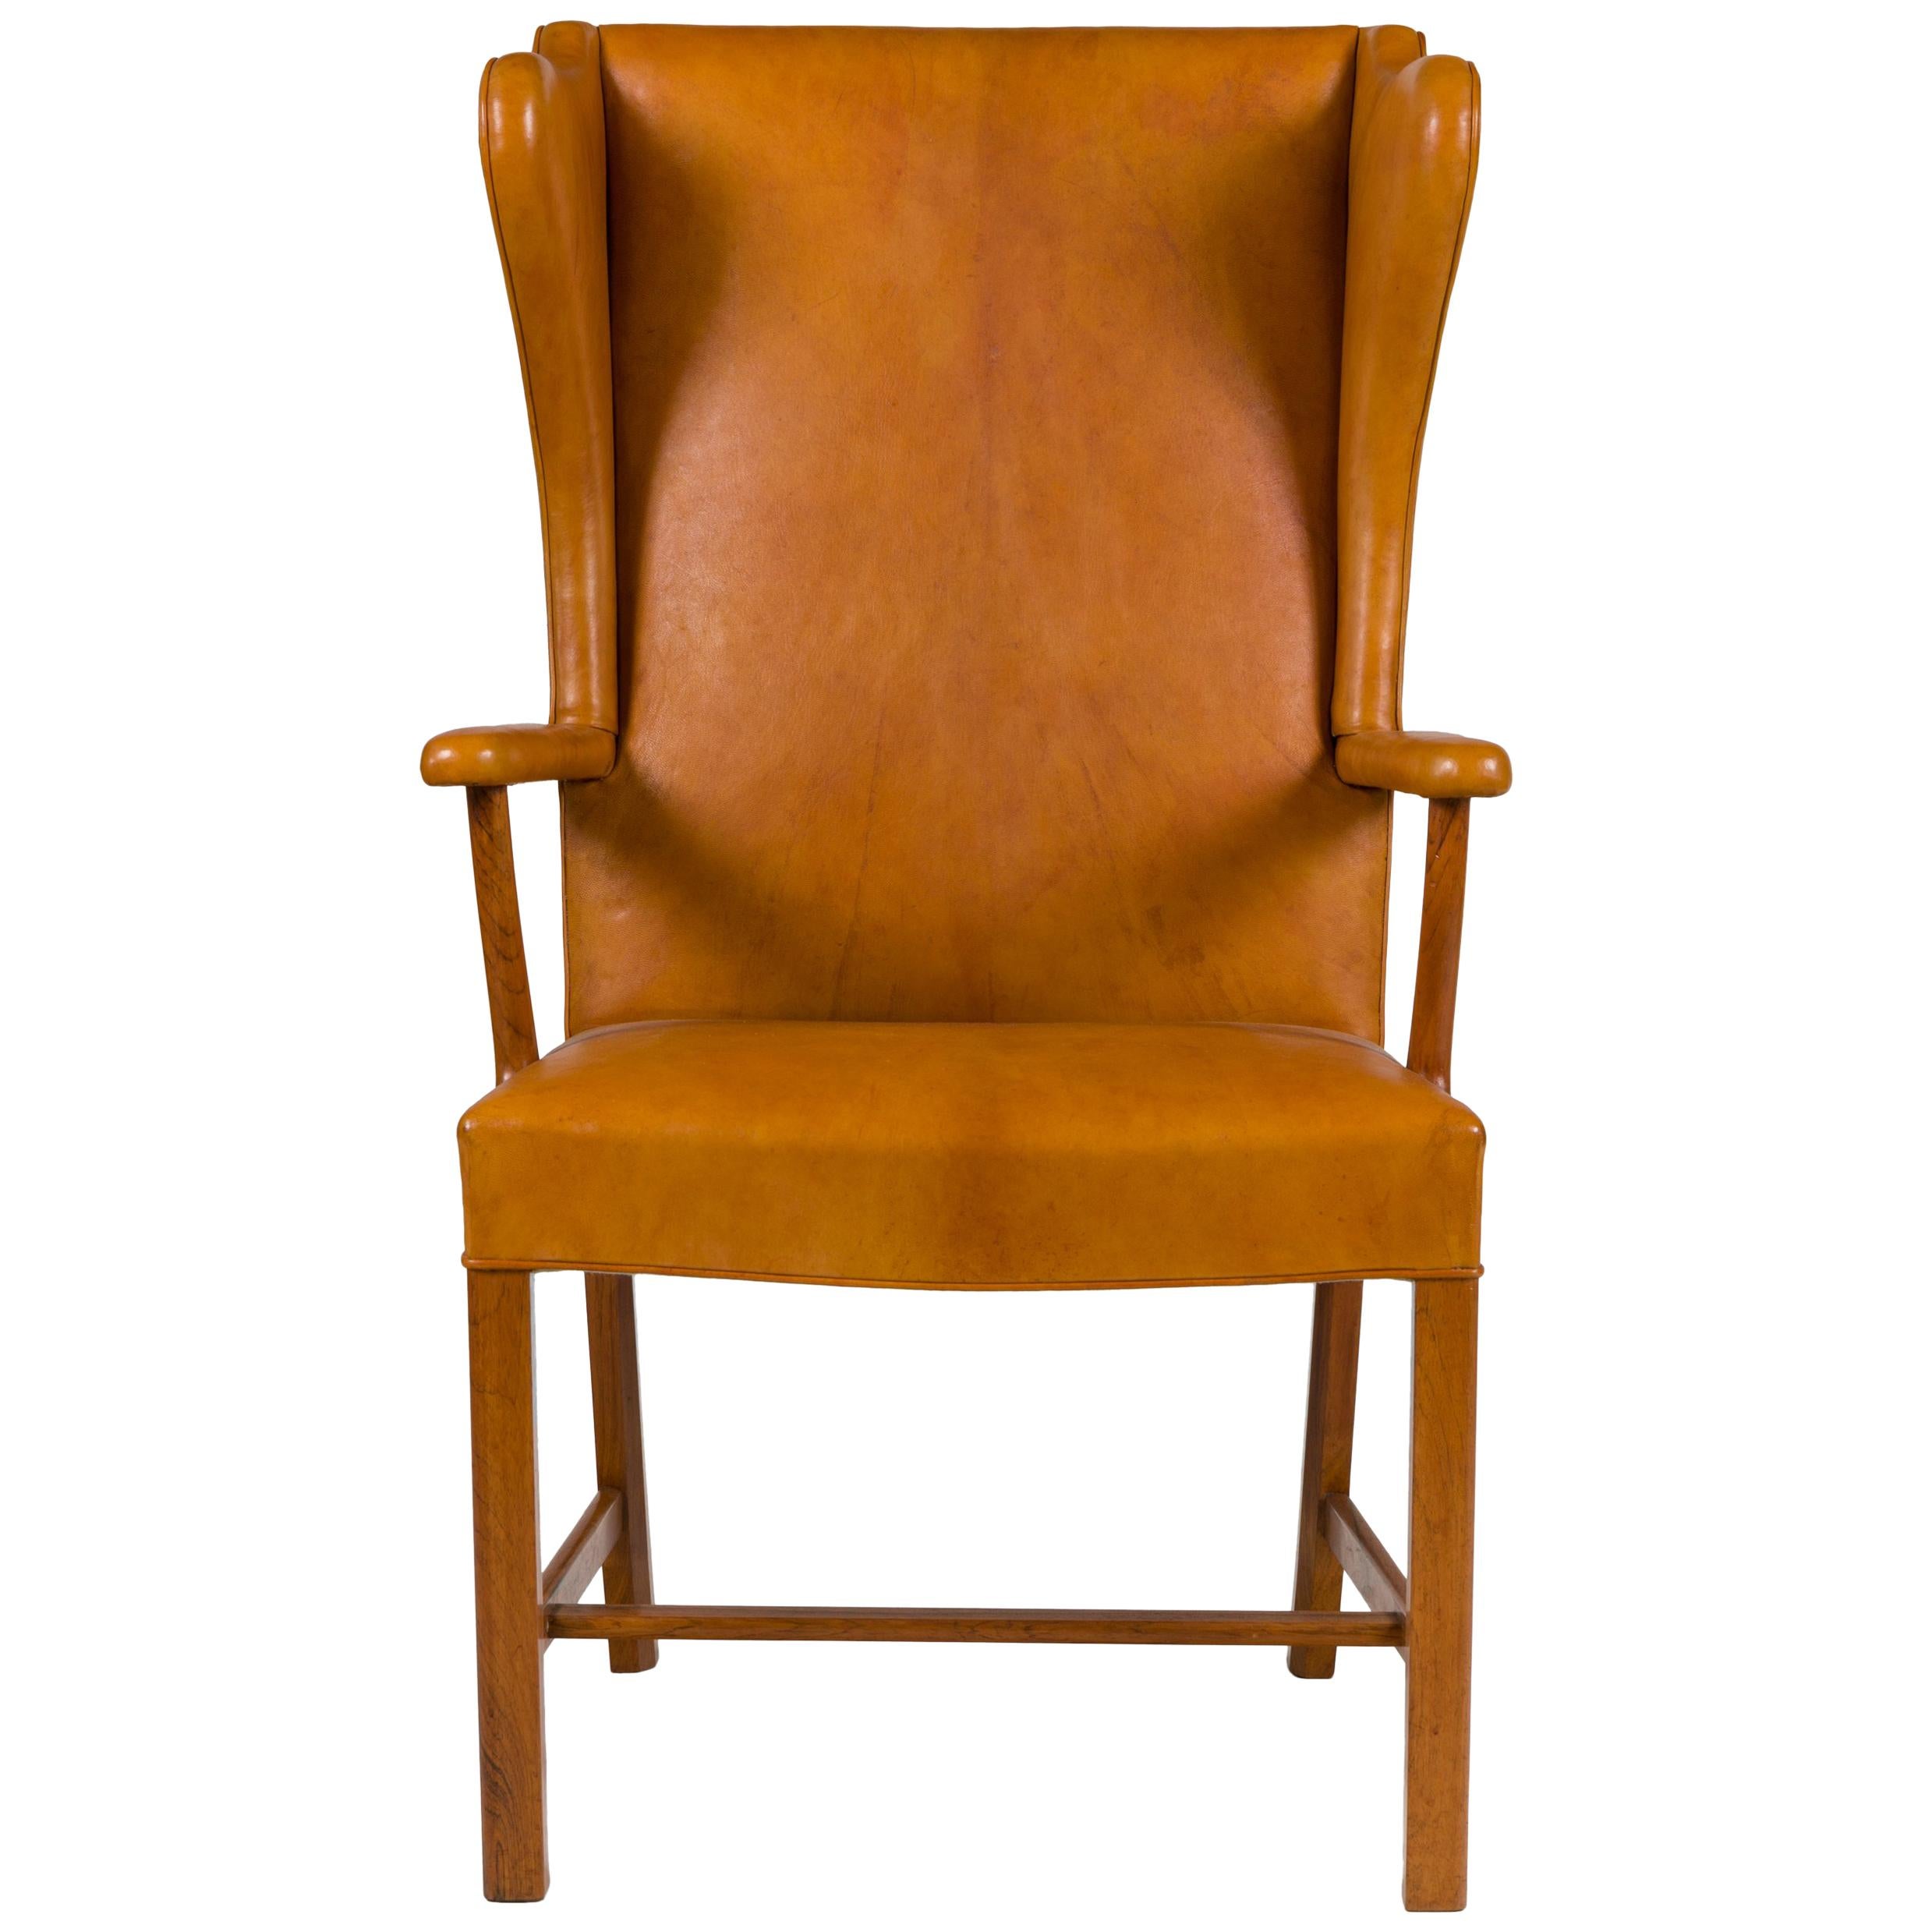 Borge Mogensen Vintage Leather High Back Arm Chair, Denmark 1947